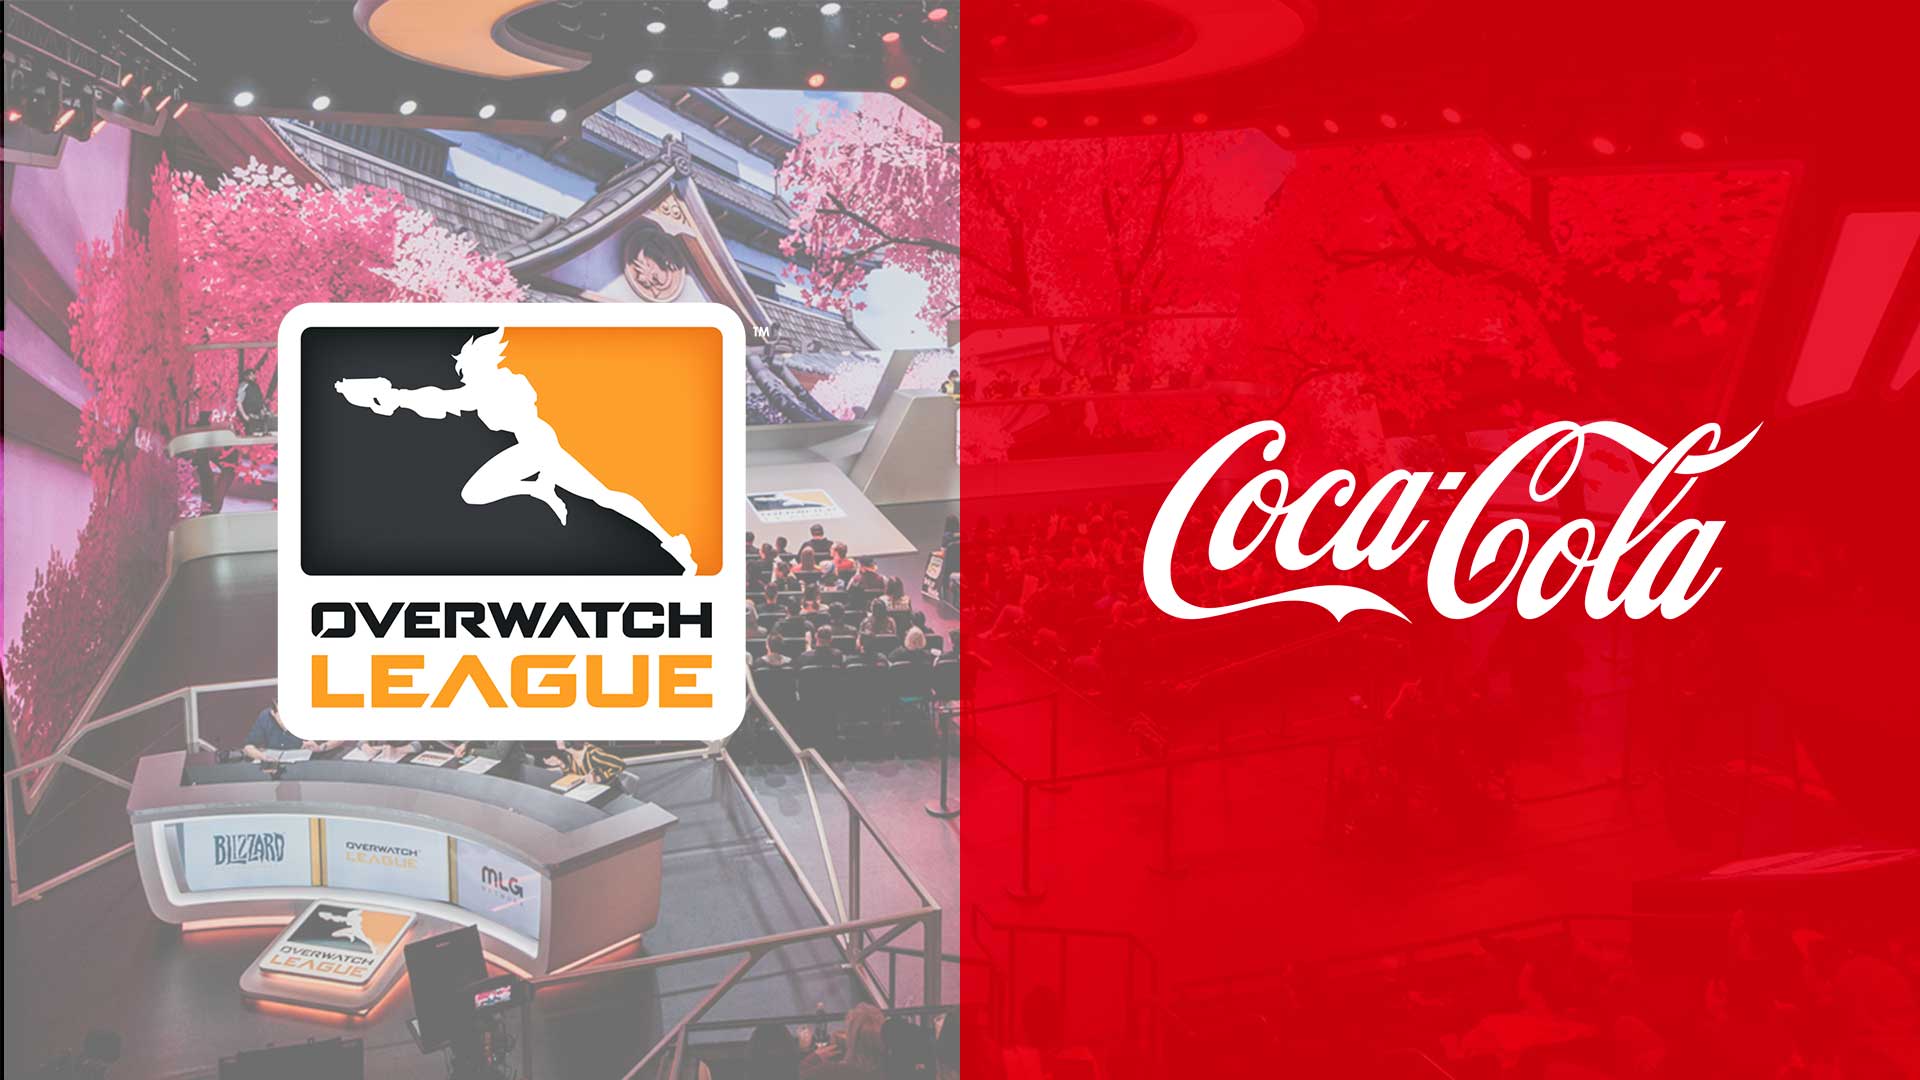 Blizzard and Coca Cola logos